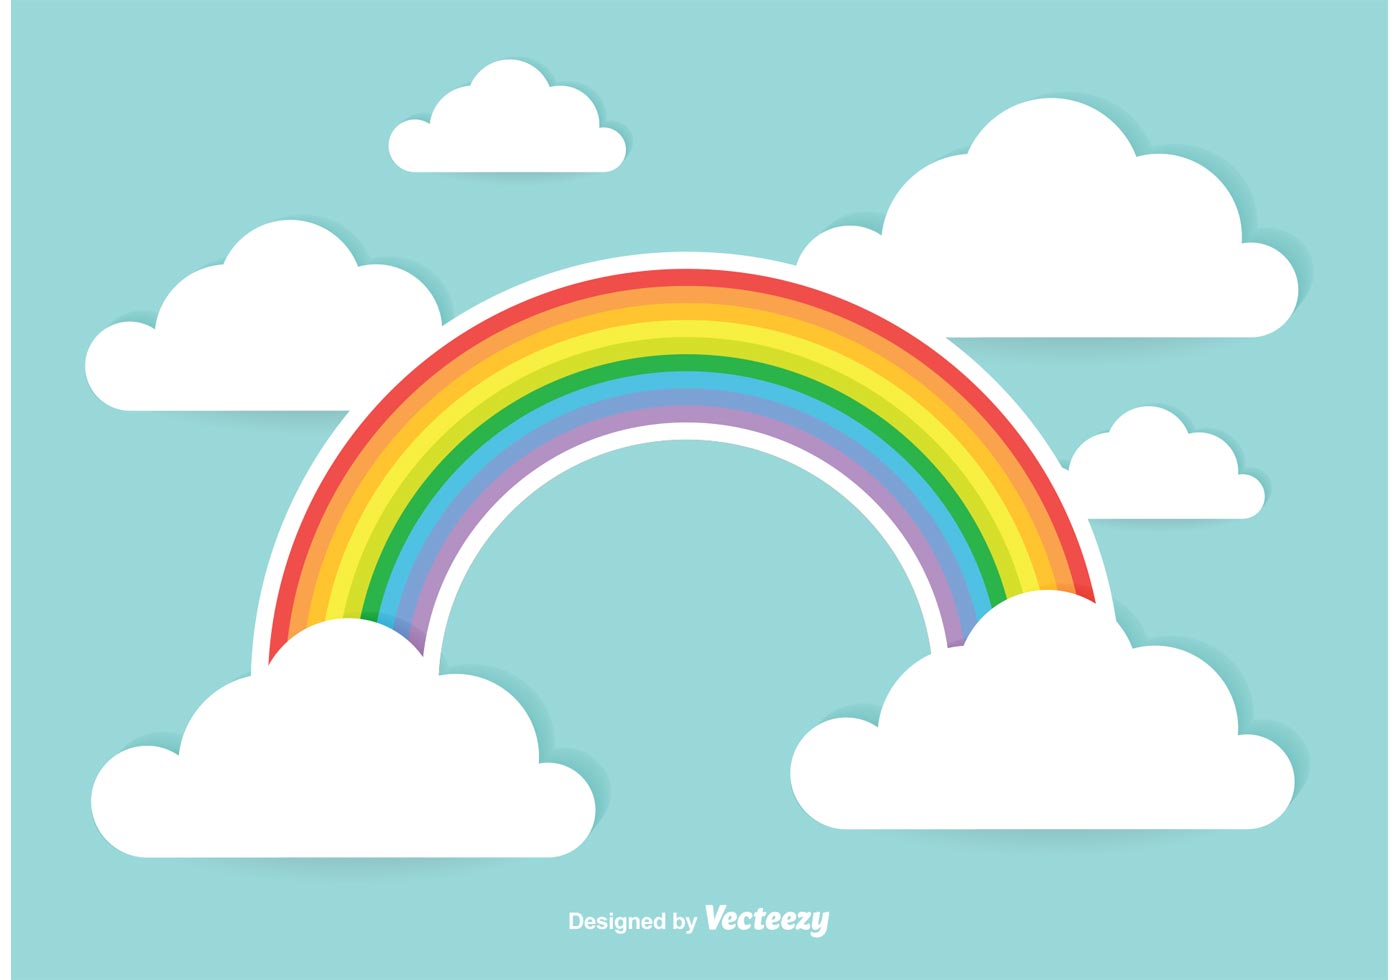 Rainbow Free Vector Art - (13078 Free Downloads)